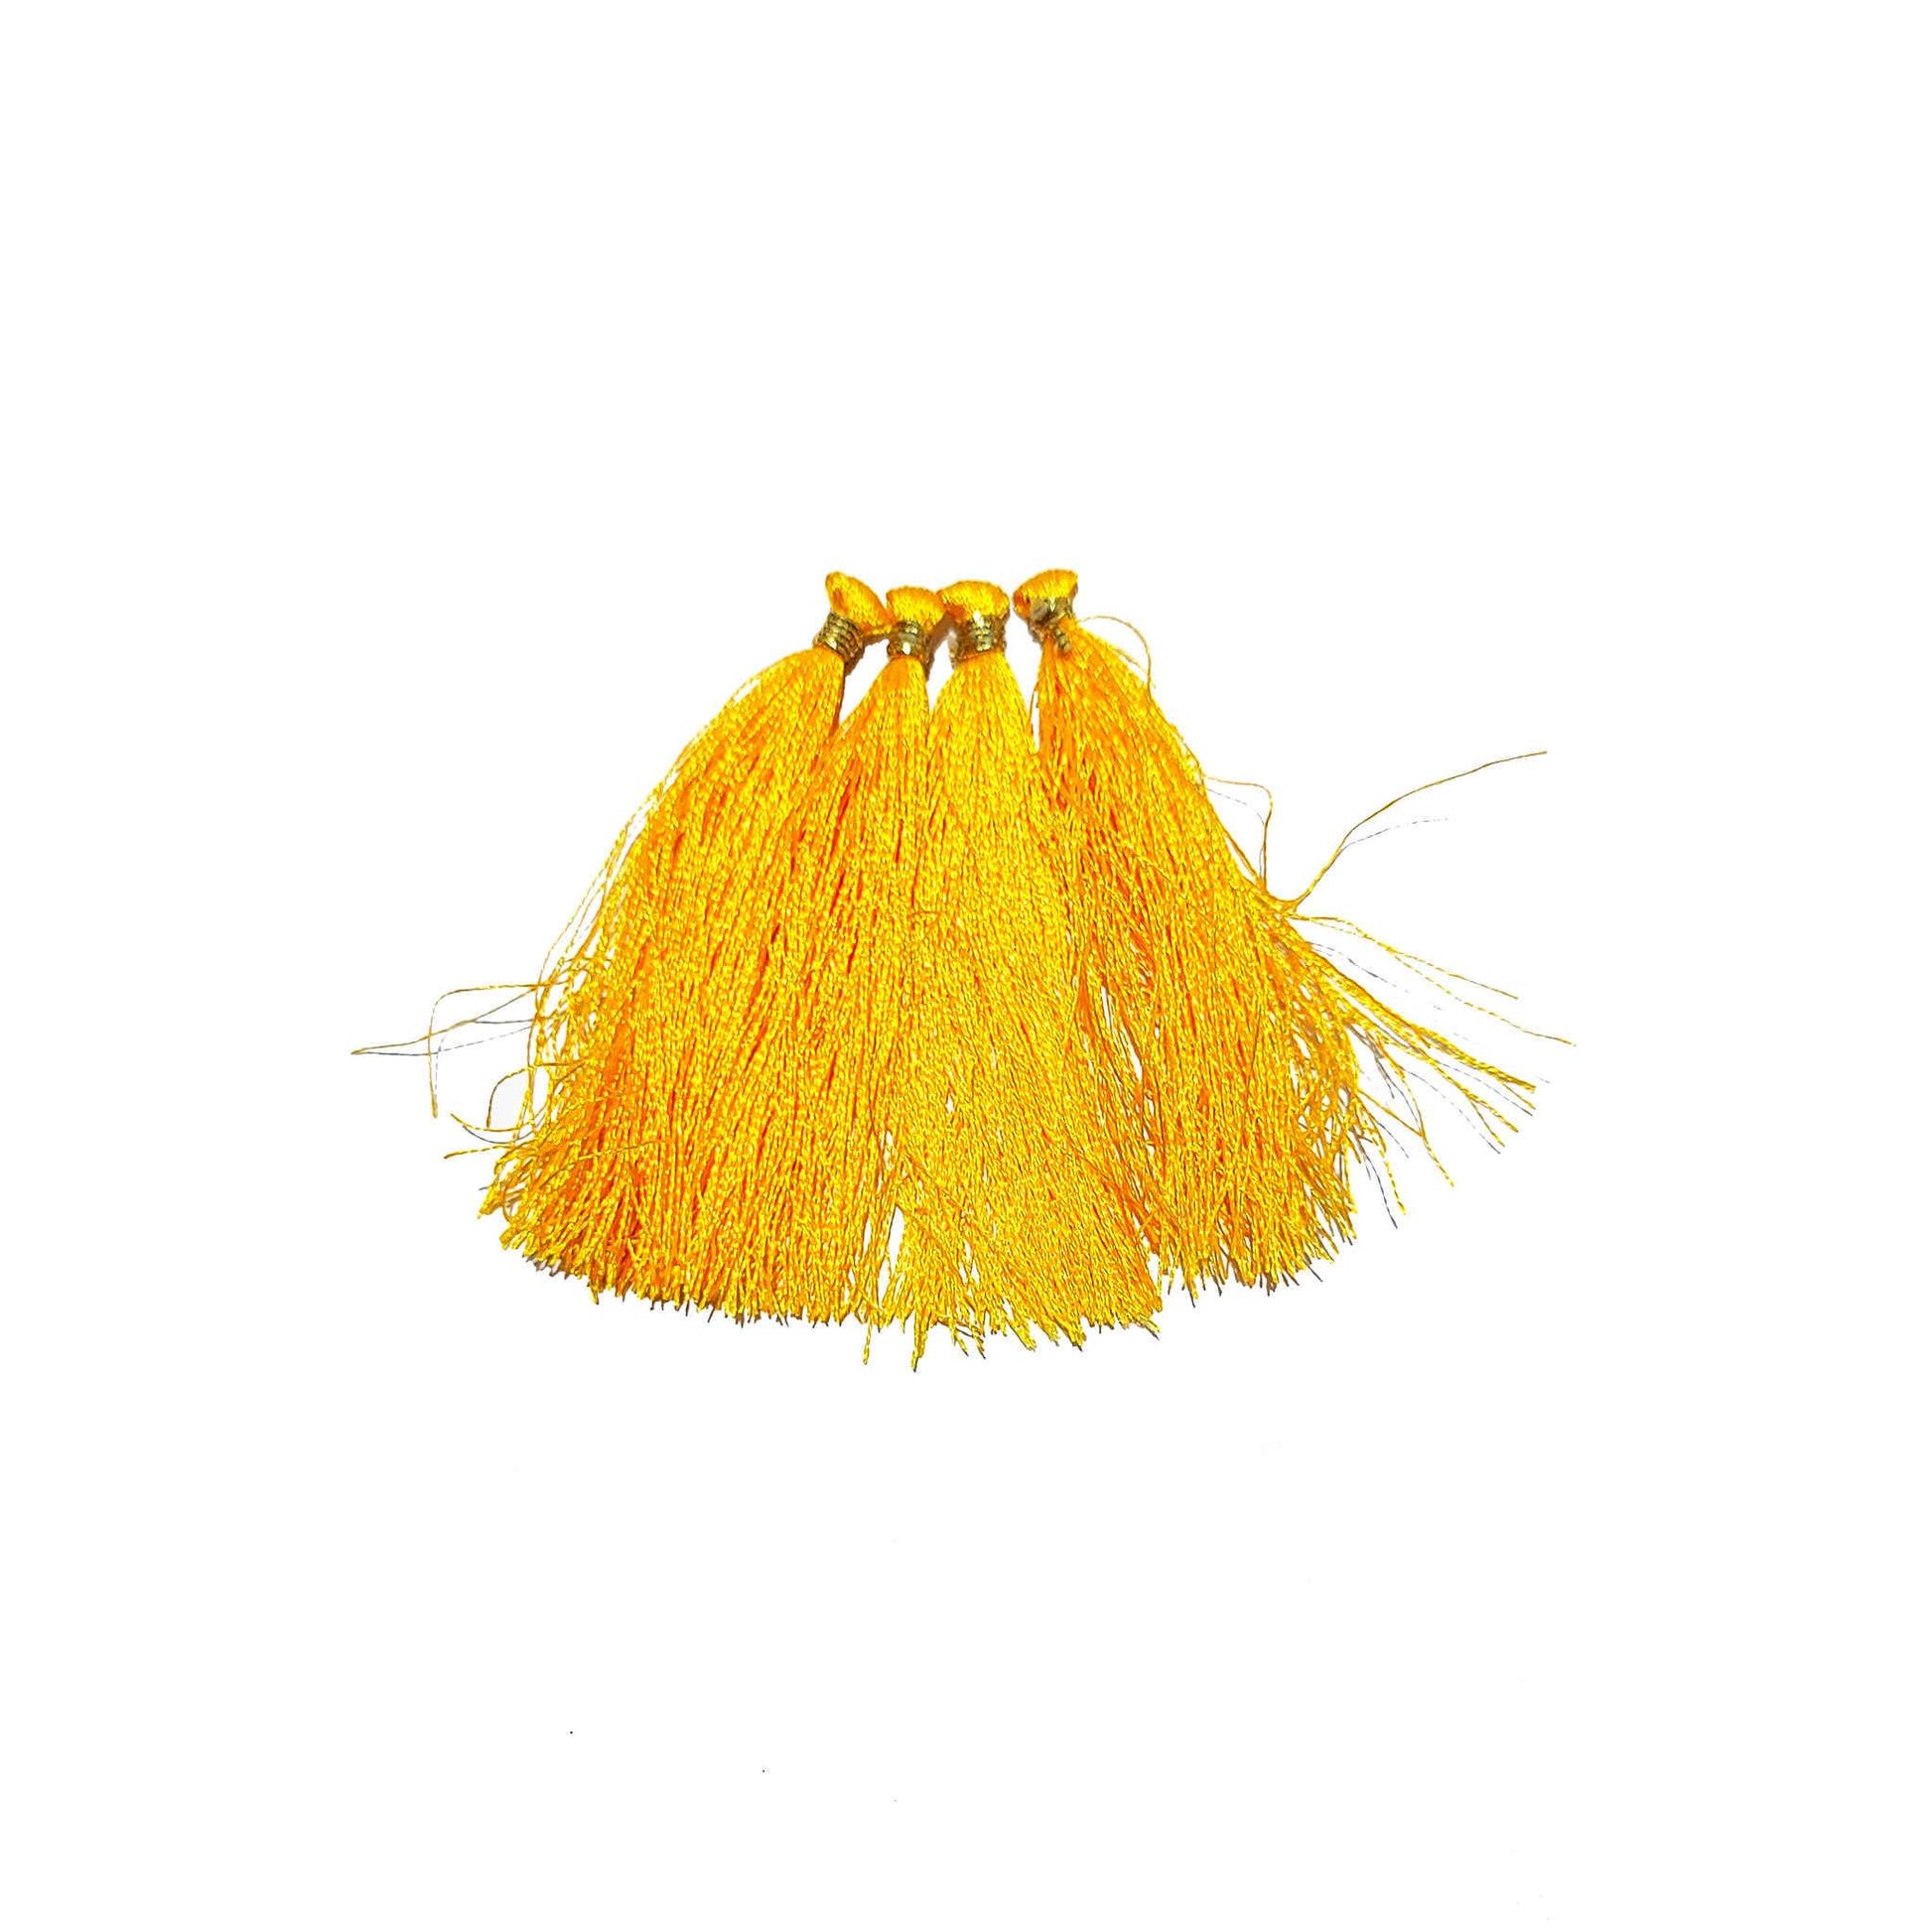 Indian Petals Handmade Long Thread Fringe Tassel for Craft, Jewelry or Dressing - Design 860, Yellow